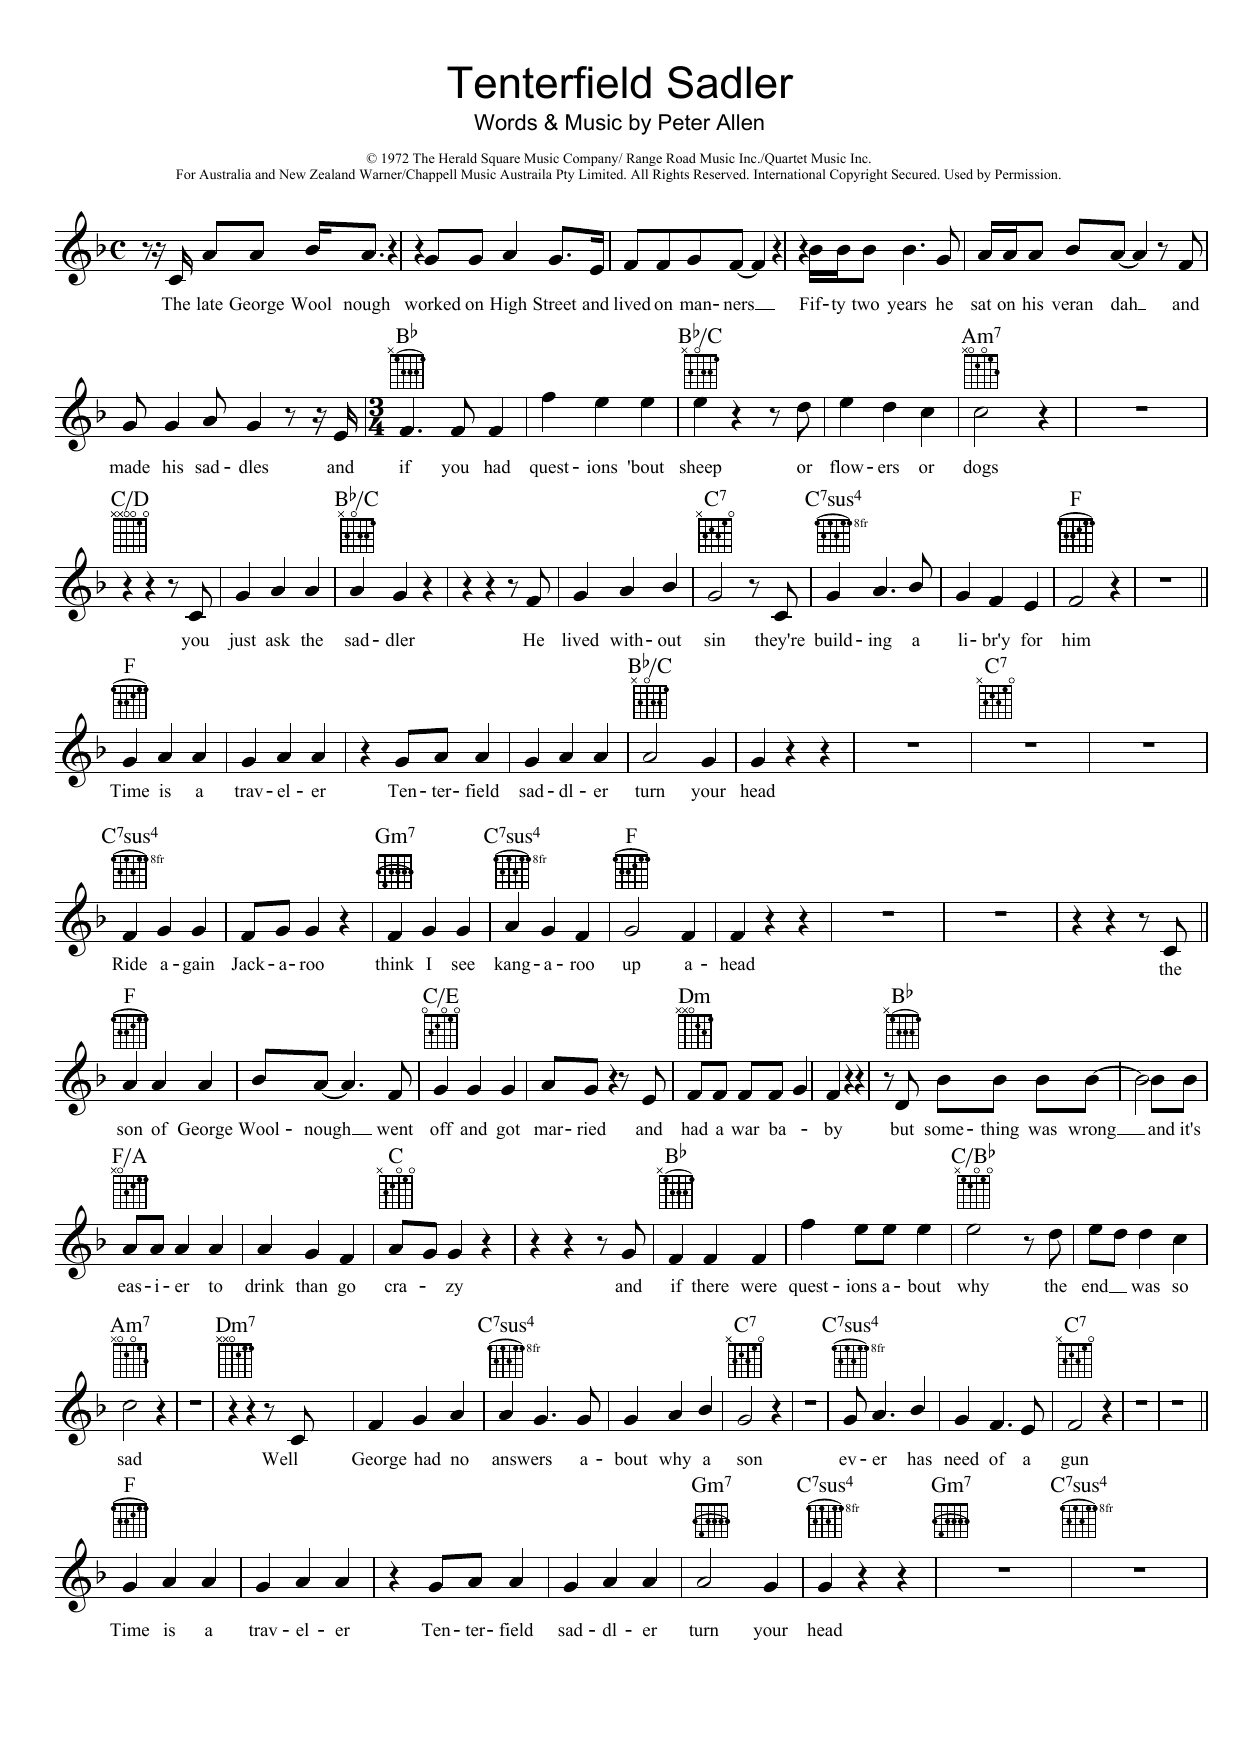 Peter Allen Tenterfield Saddler Sheet Music Notes & Chords for Melody Line, Lyrics & Chords - Download or Print PDF